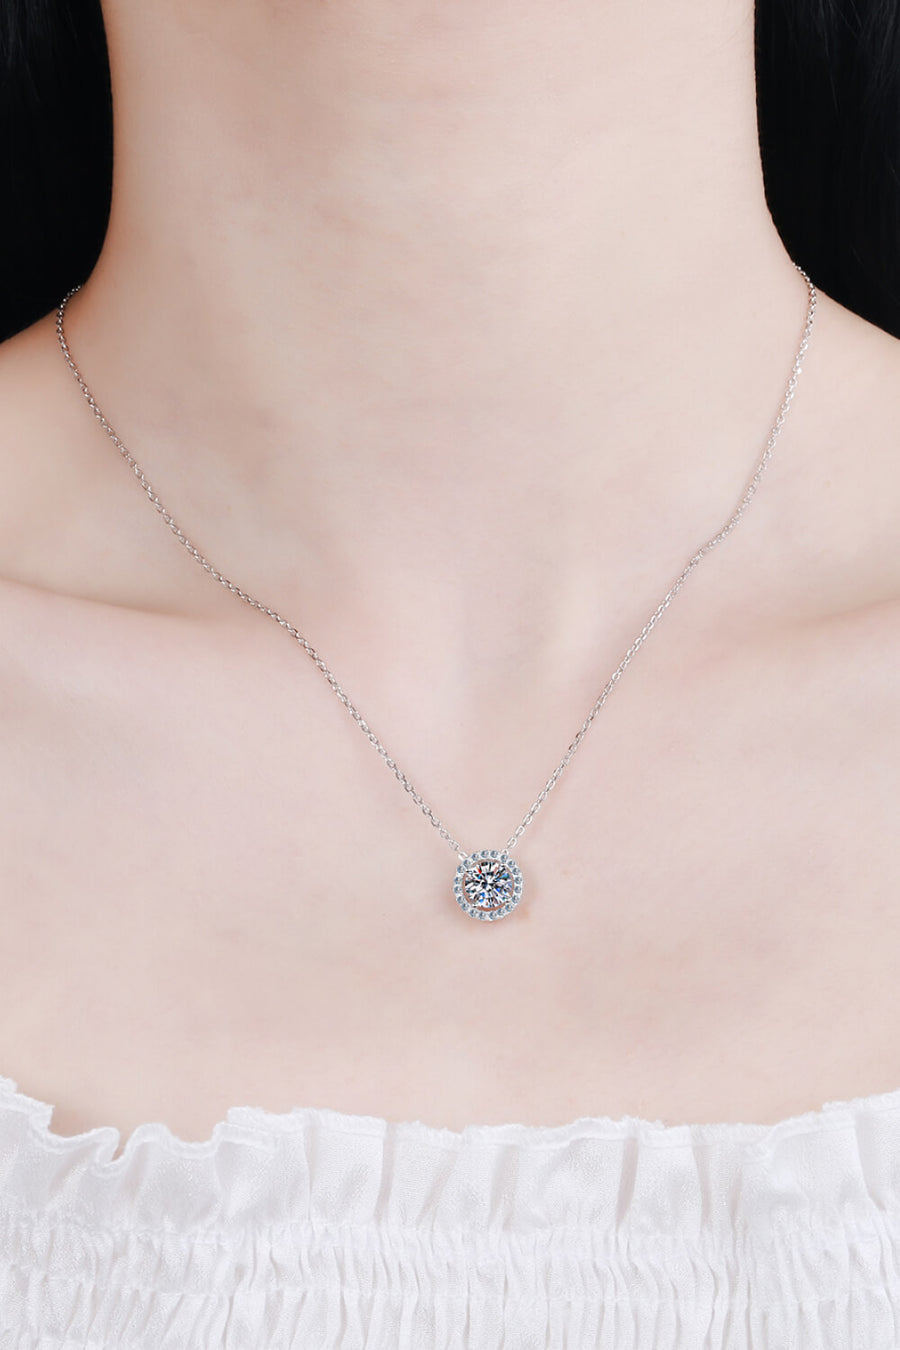 Best Diamond Necklace Jewelry Gifts for Women | 1 Carat Round Diamond Pendant Chain Necklace | MASON New York